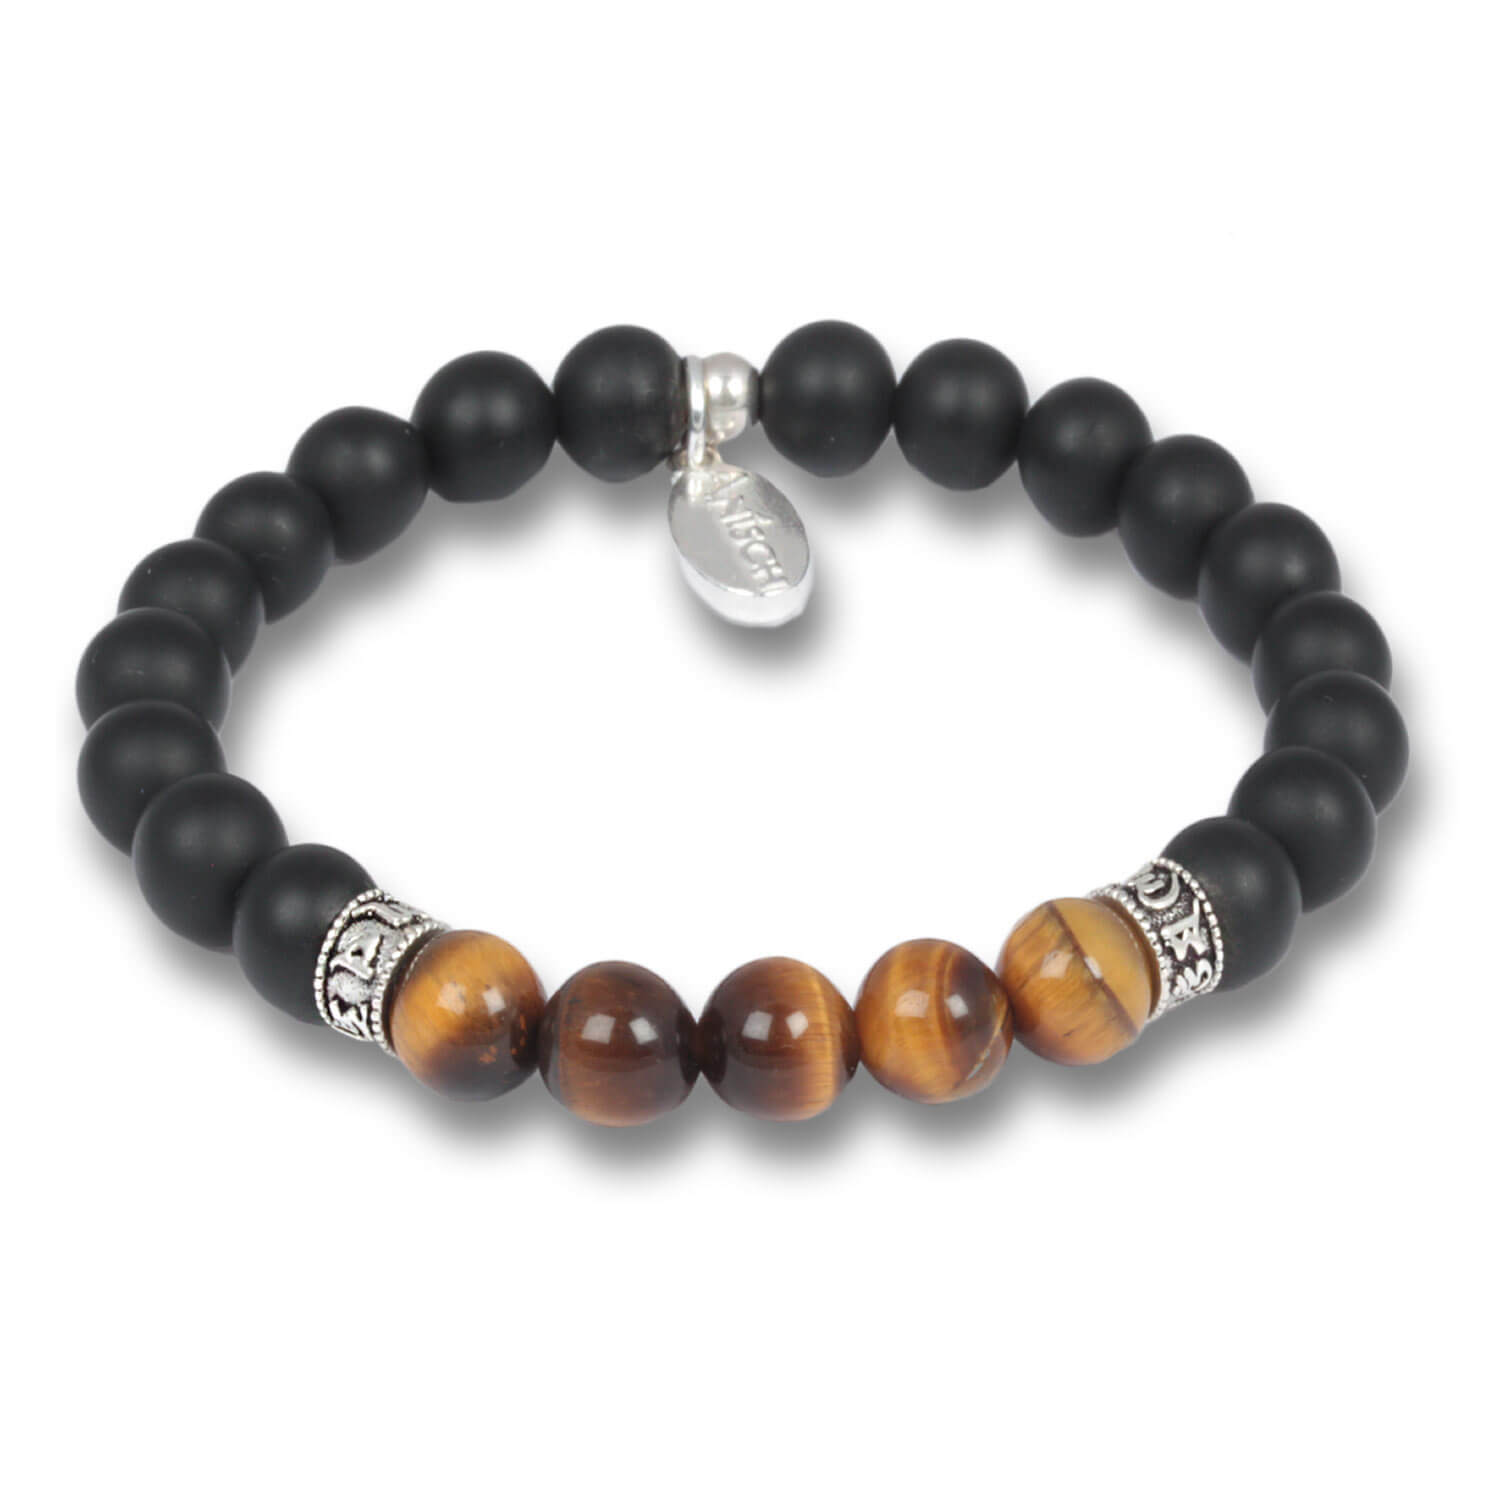 Tigereye - Mantra Beads gemstone bracelet for men with sterling silver, 8 mm